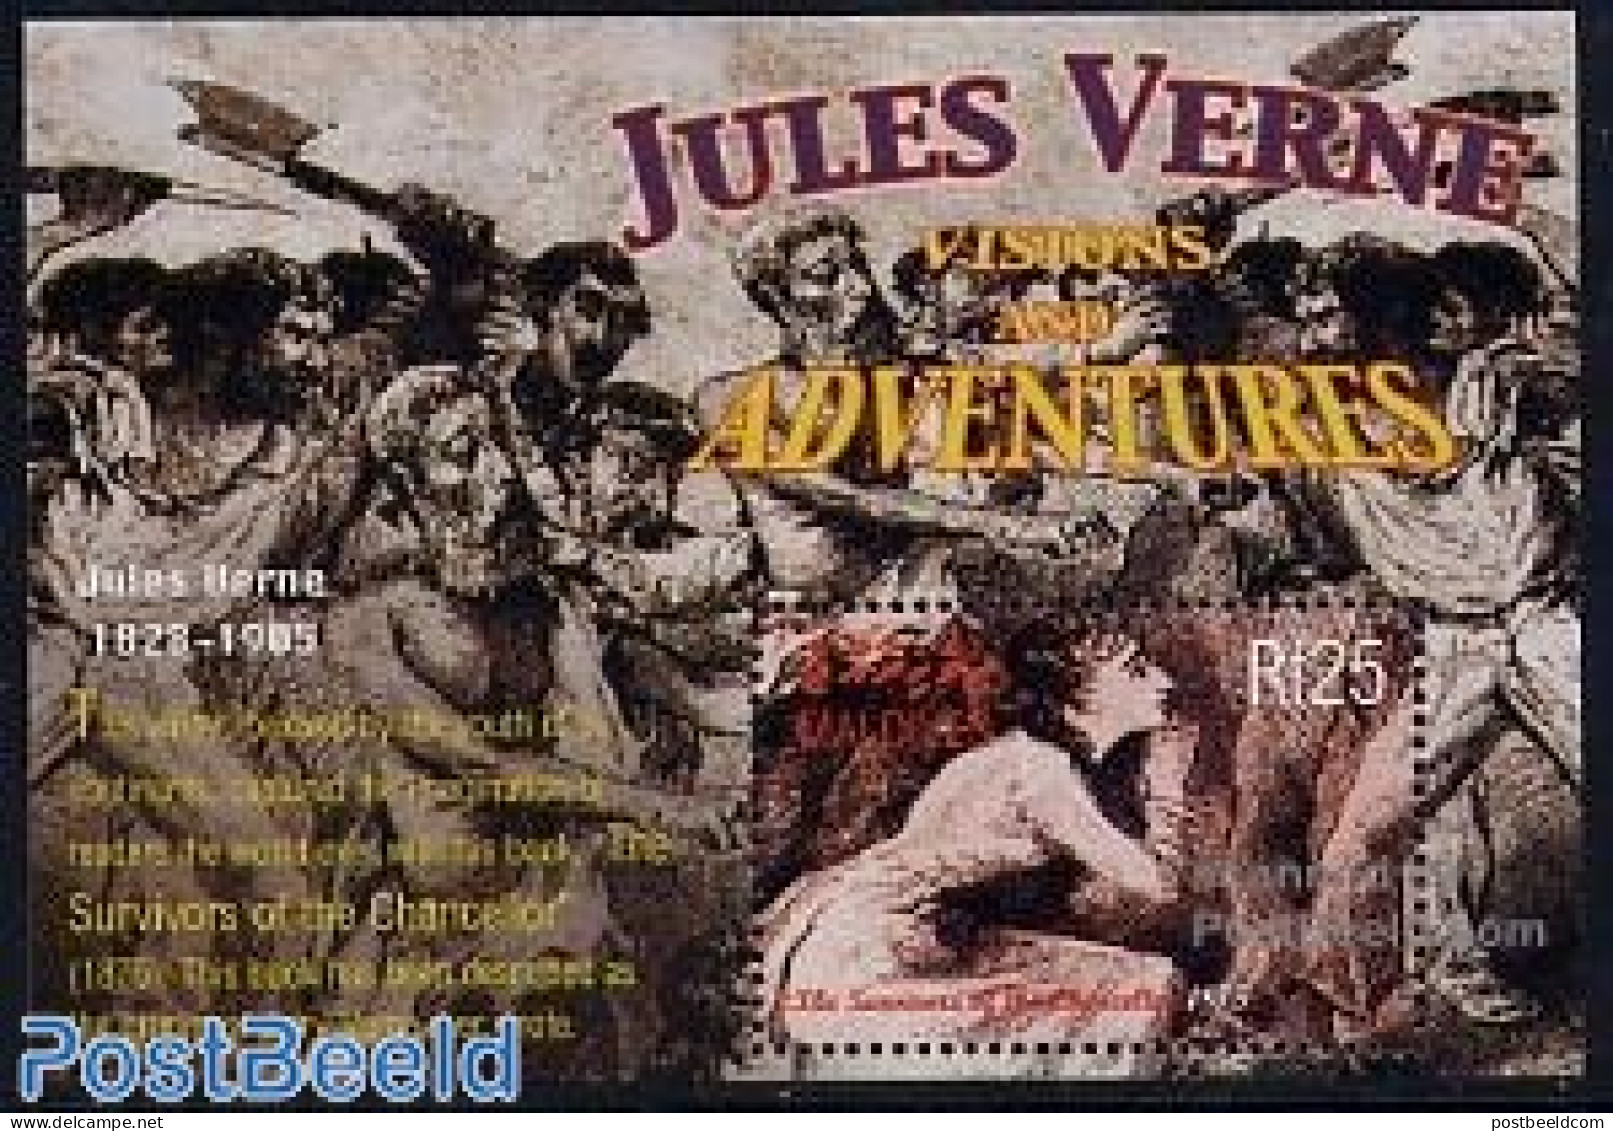 Maldives 2004 Jules Verne S/s, Survivers Of The Chancellor, Mint NH, Art - Jules Verne - Science Fiction - Unclassified